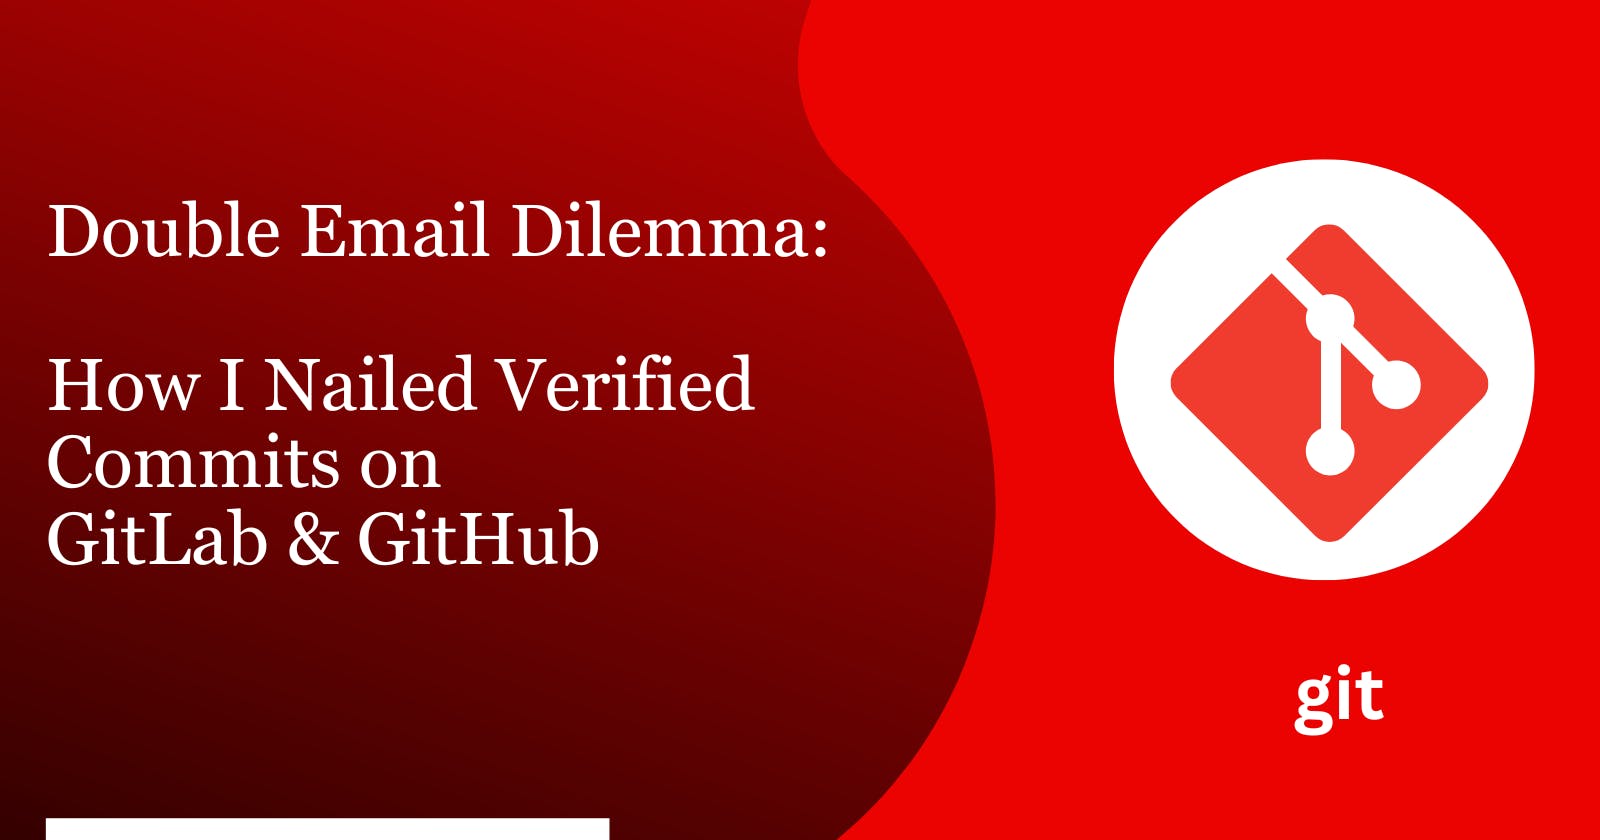 Double Email Dilemma: How I Nailed Verified Commits on GitLab & GitHub